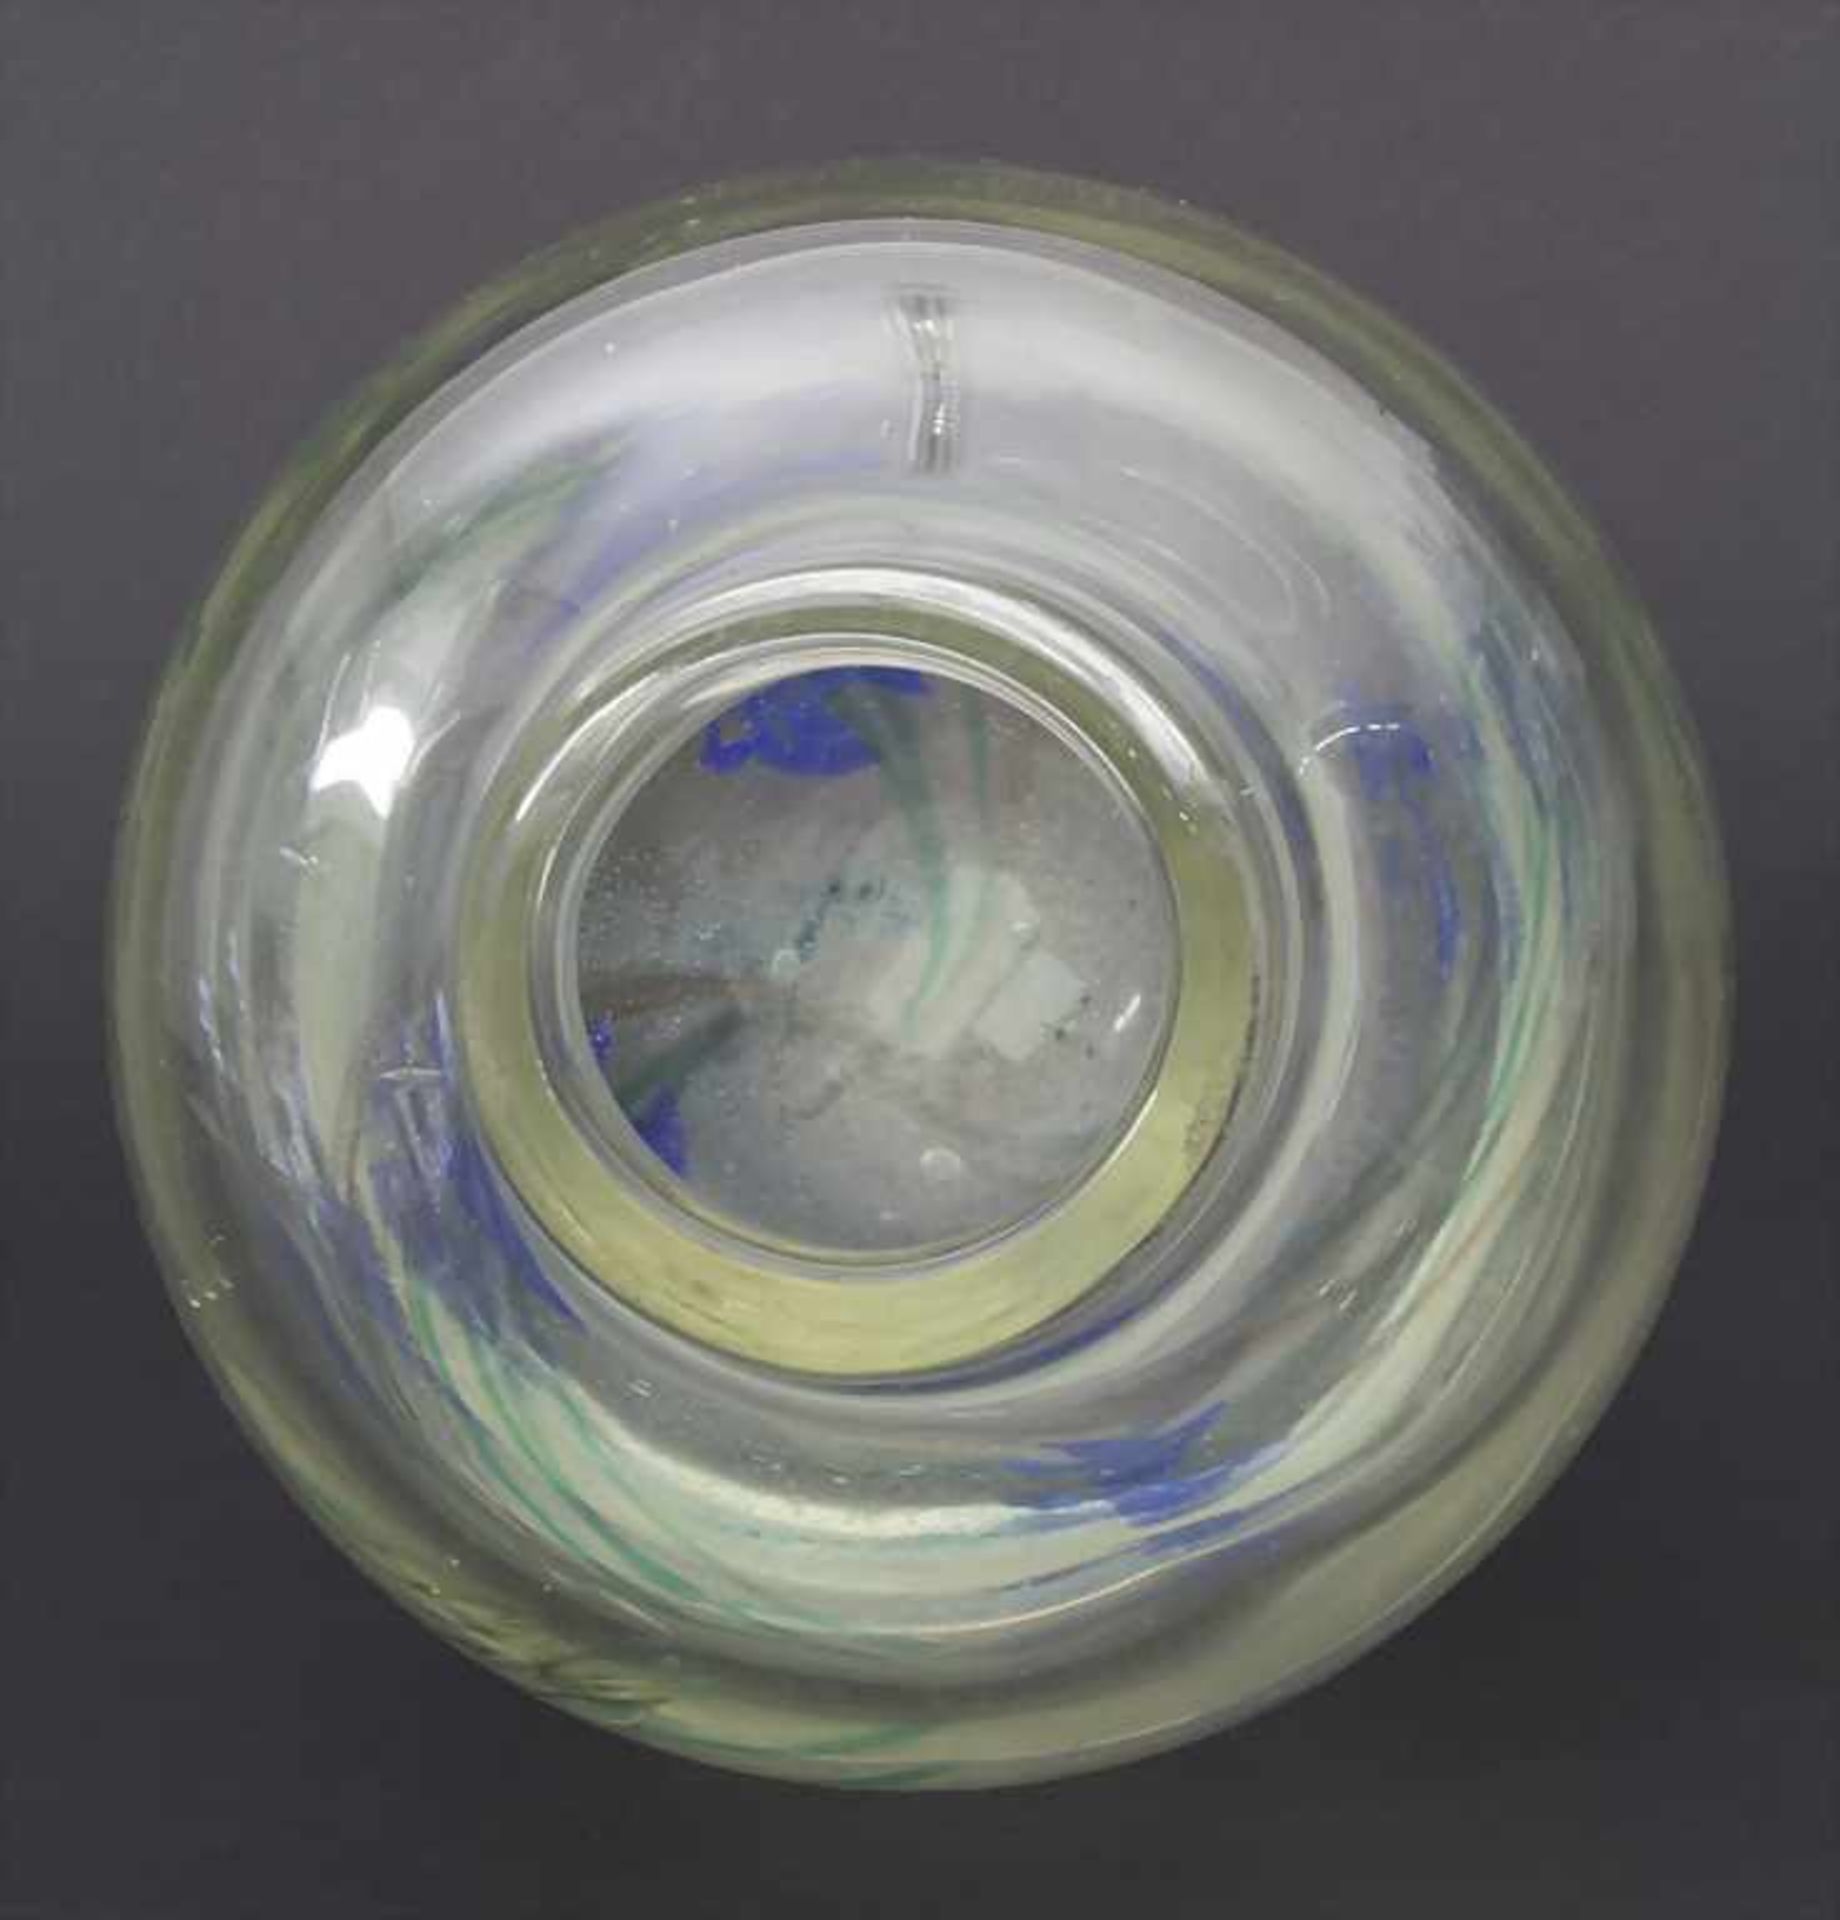 Ziervase / A decorative vase, Skandinavien, 50/60er JahreMaterial/Technik: farbloses Glas, im - Image 3 of 5